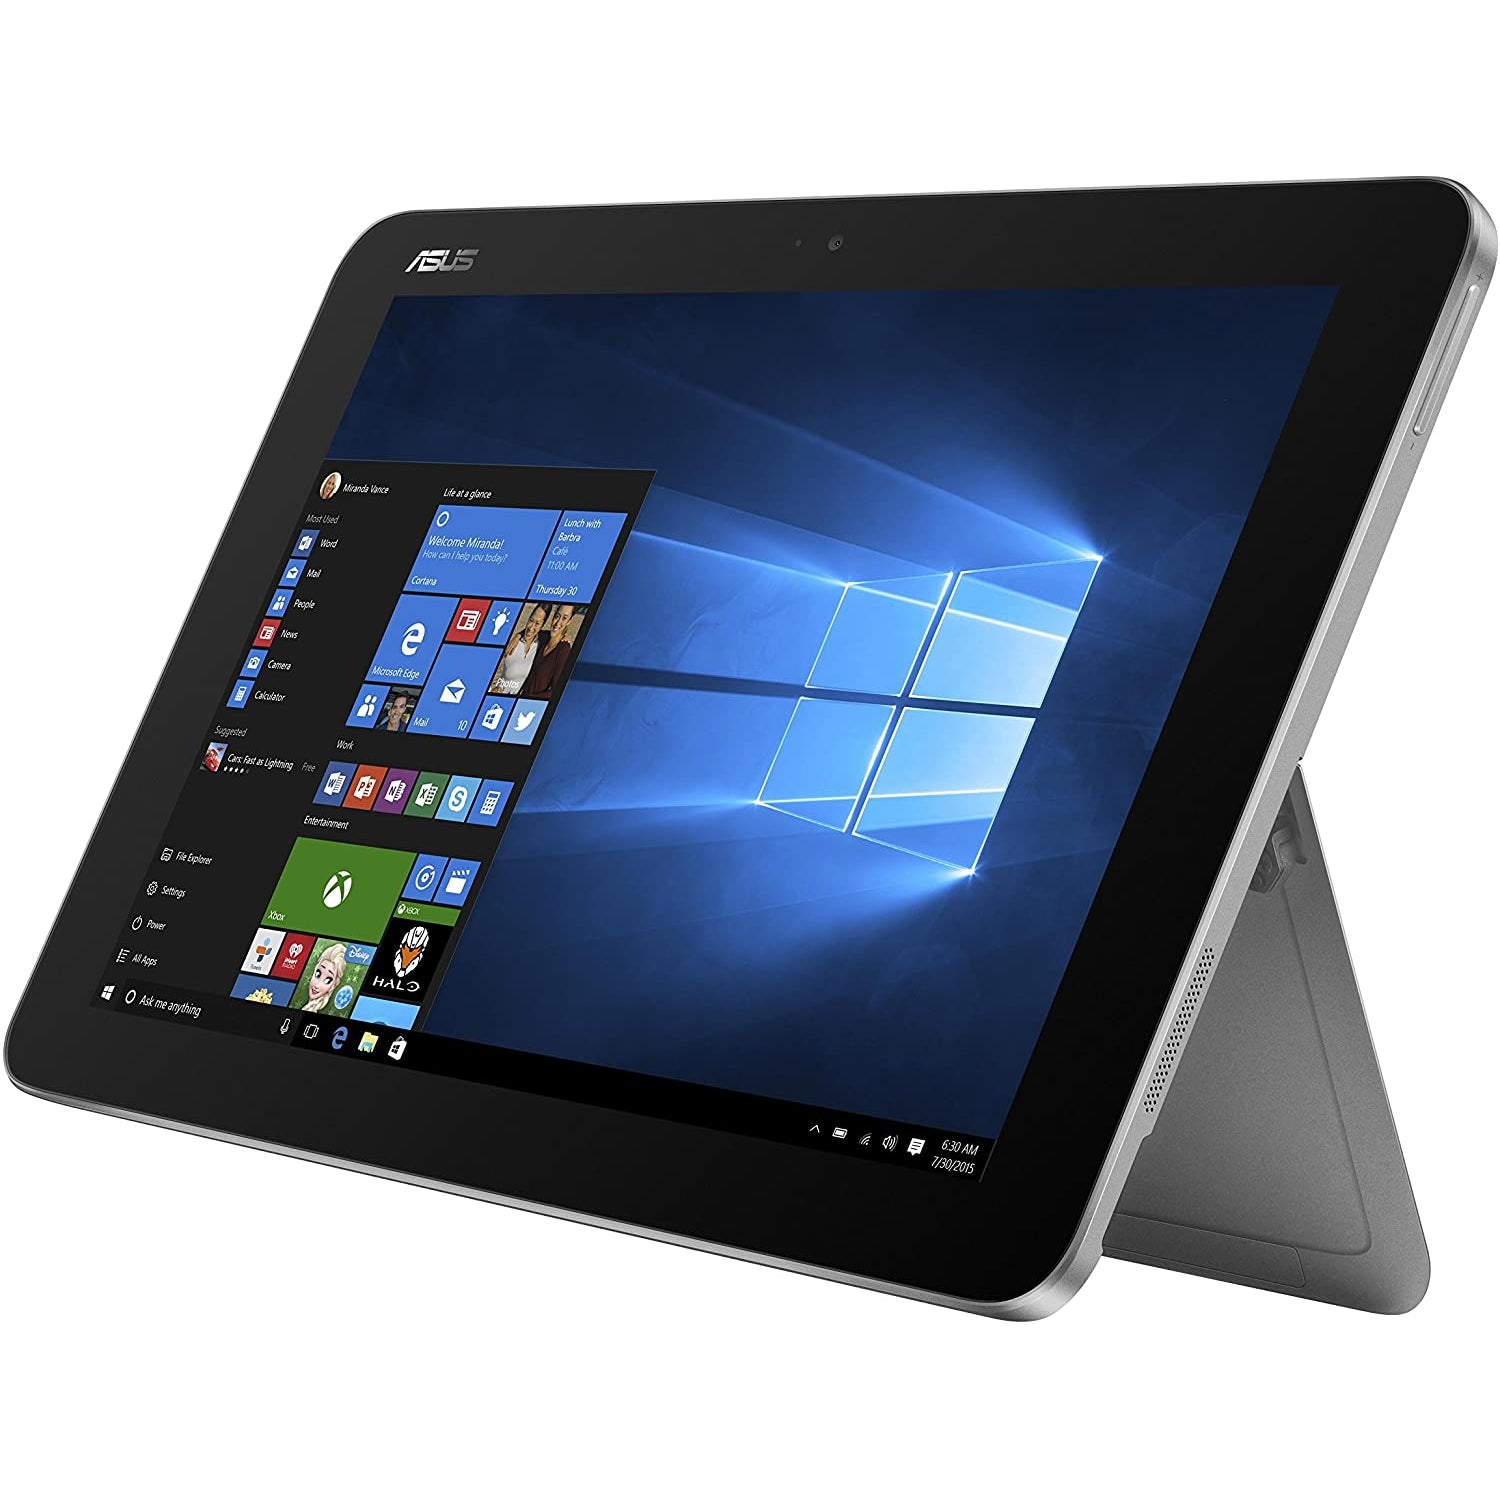 ASUS T102HA-GR035T 10.1 inch 2-in-1 Transformer Mini Tablet, Quartz Grey (Intel Atom X5-Z8350 Processor, 4 GB RAM, 64 GB eMMC, Windows 10)